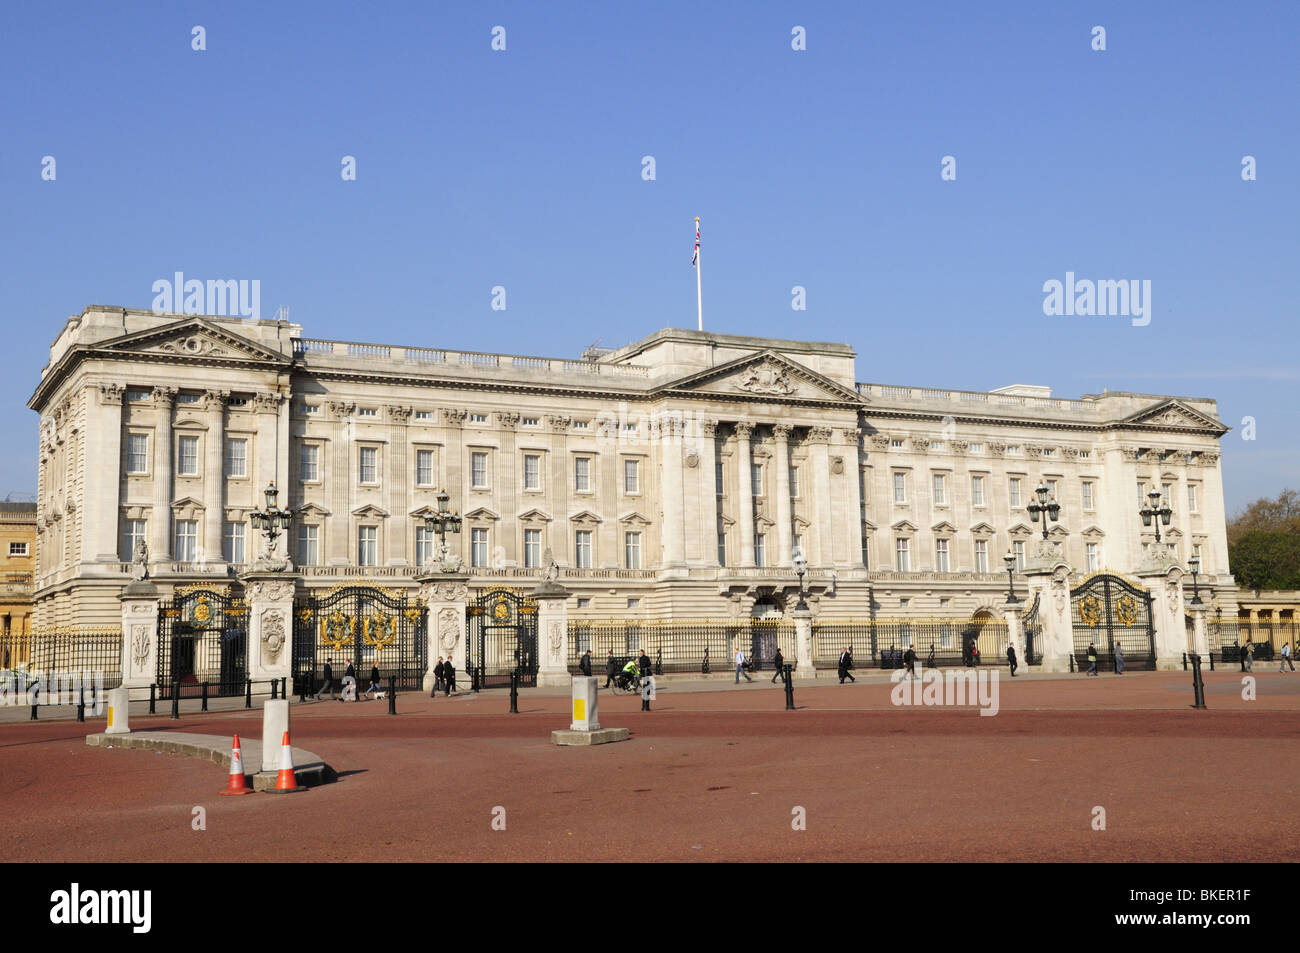 Buckingham Palace, London, England, UK Banque D'Images